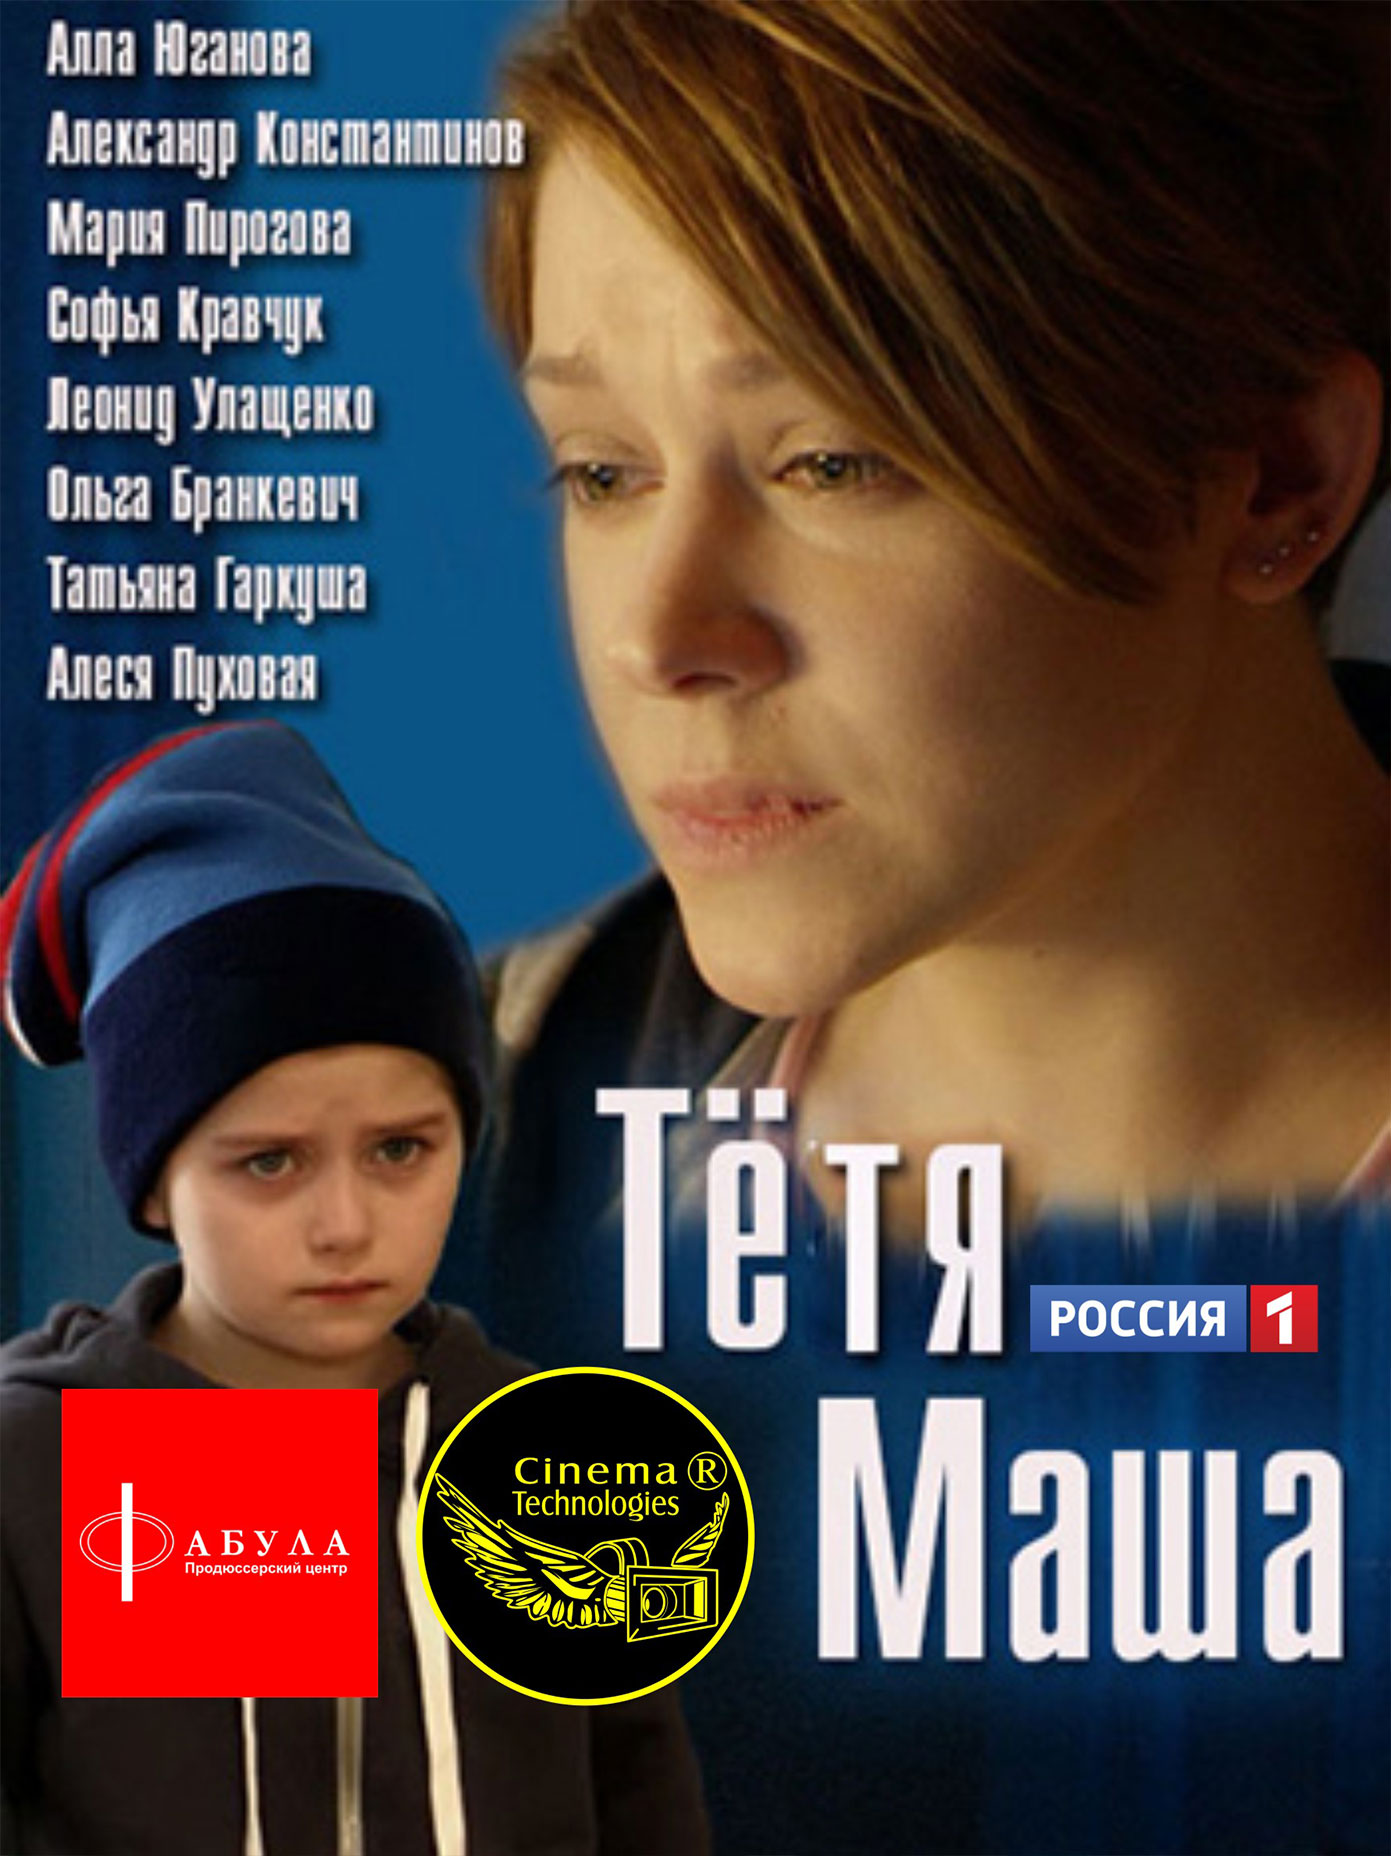 Tetya Masha